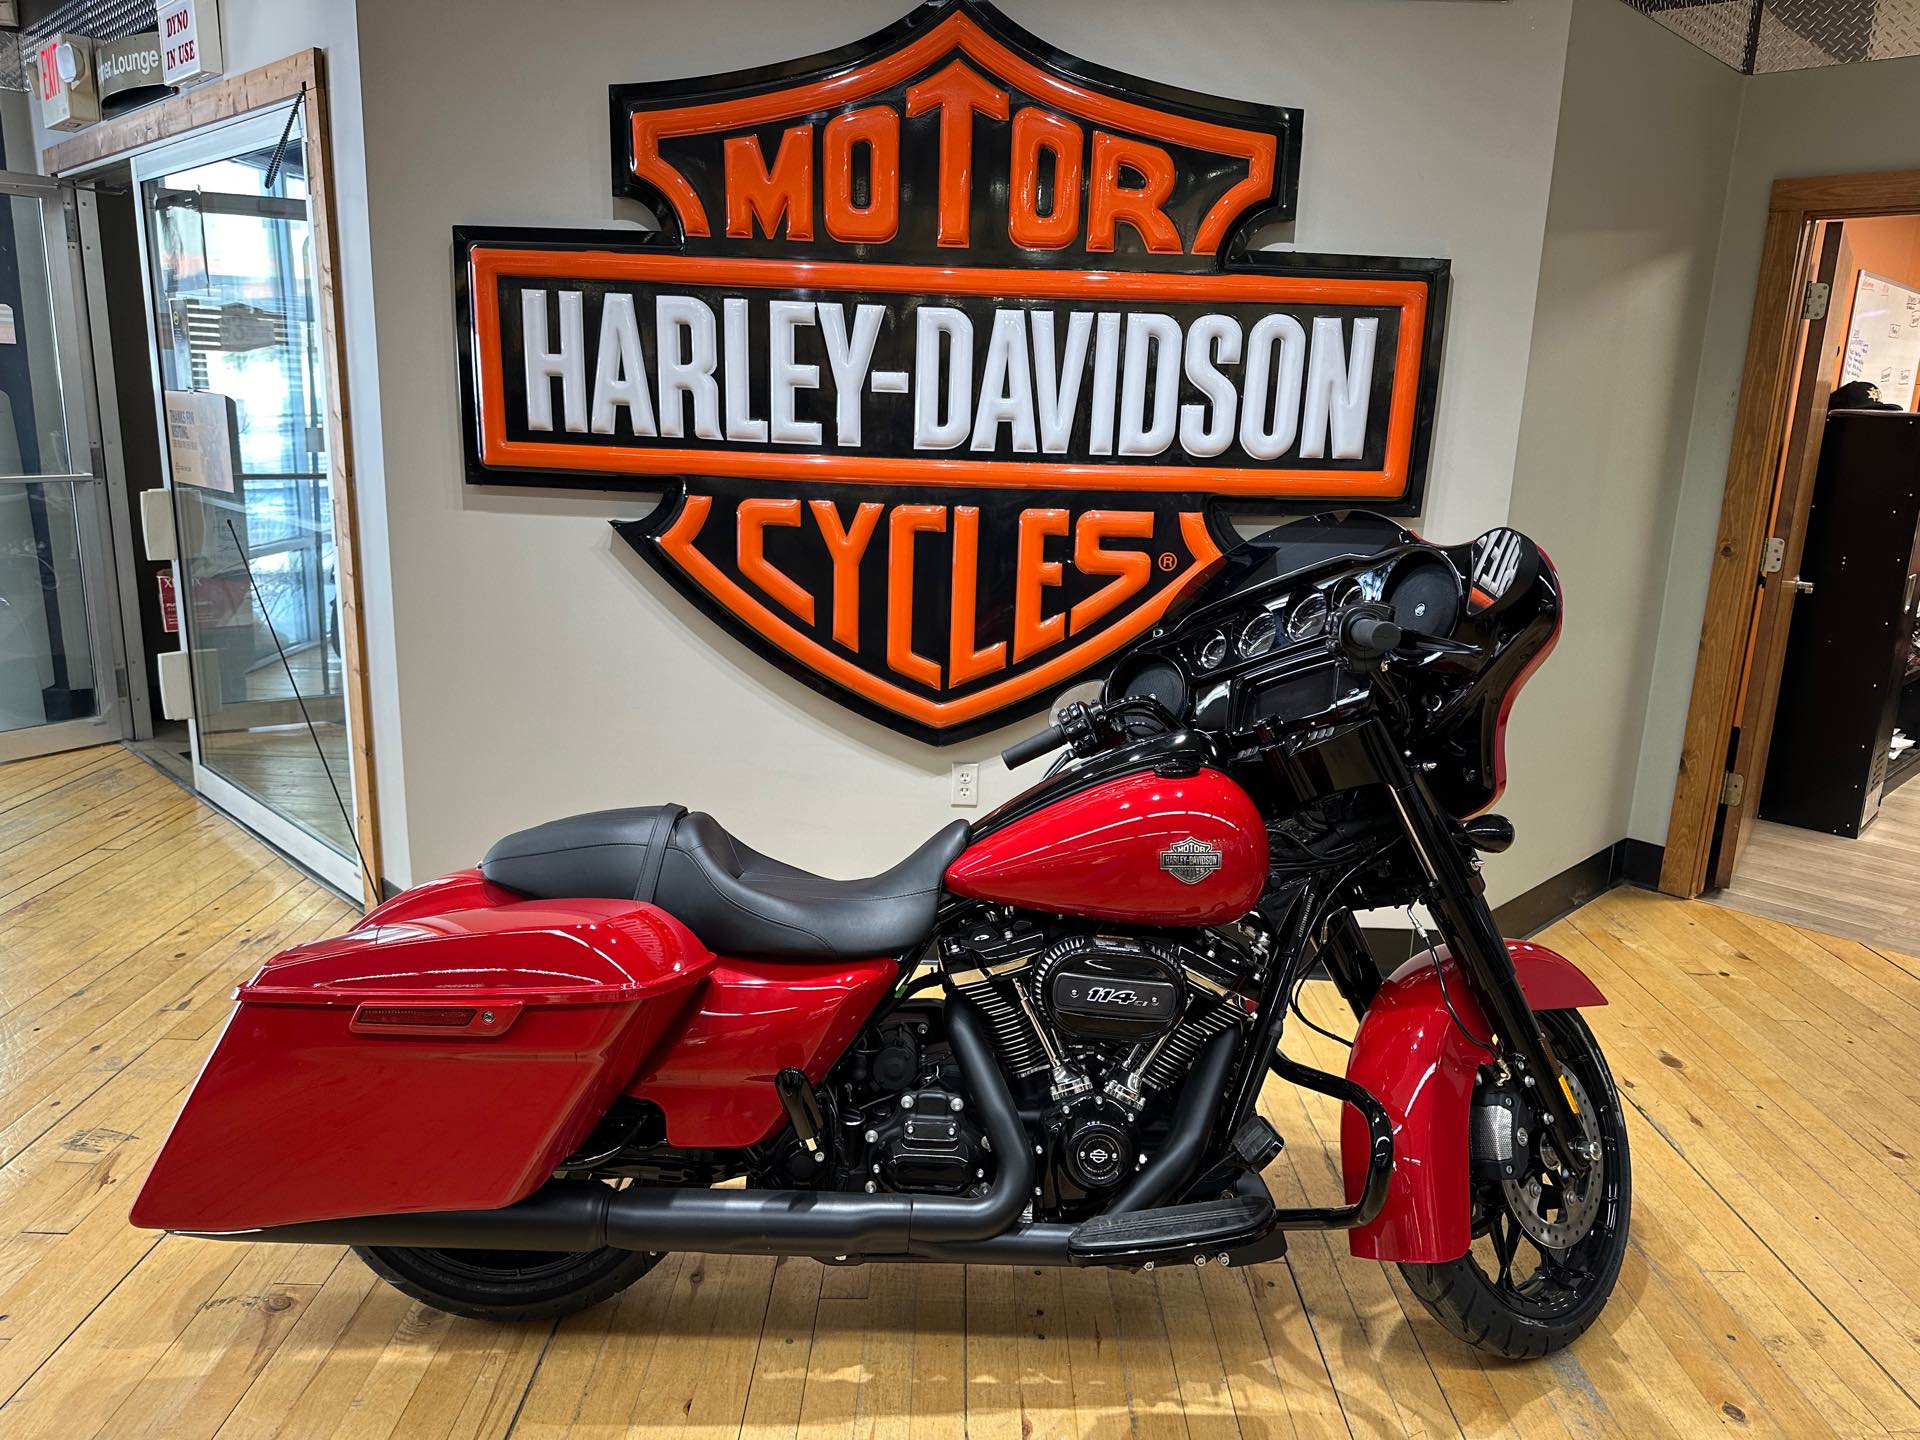 2022 Harley-Davidson Street Glide Special at Zips 45th Parallel Harley-Davidson